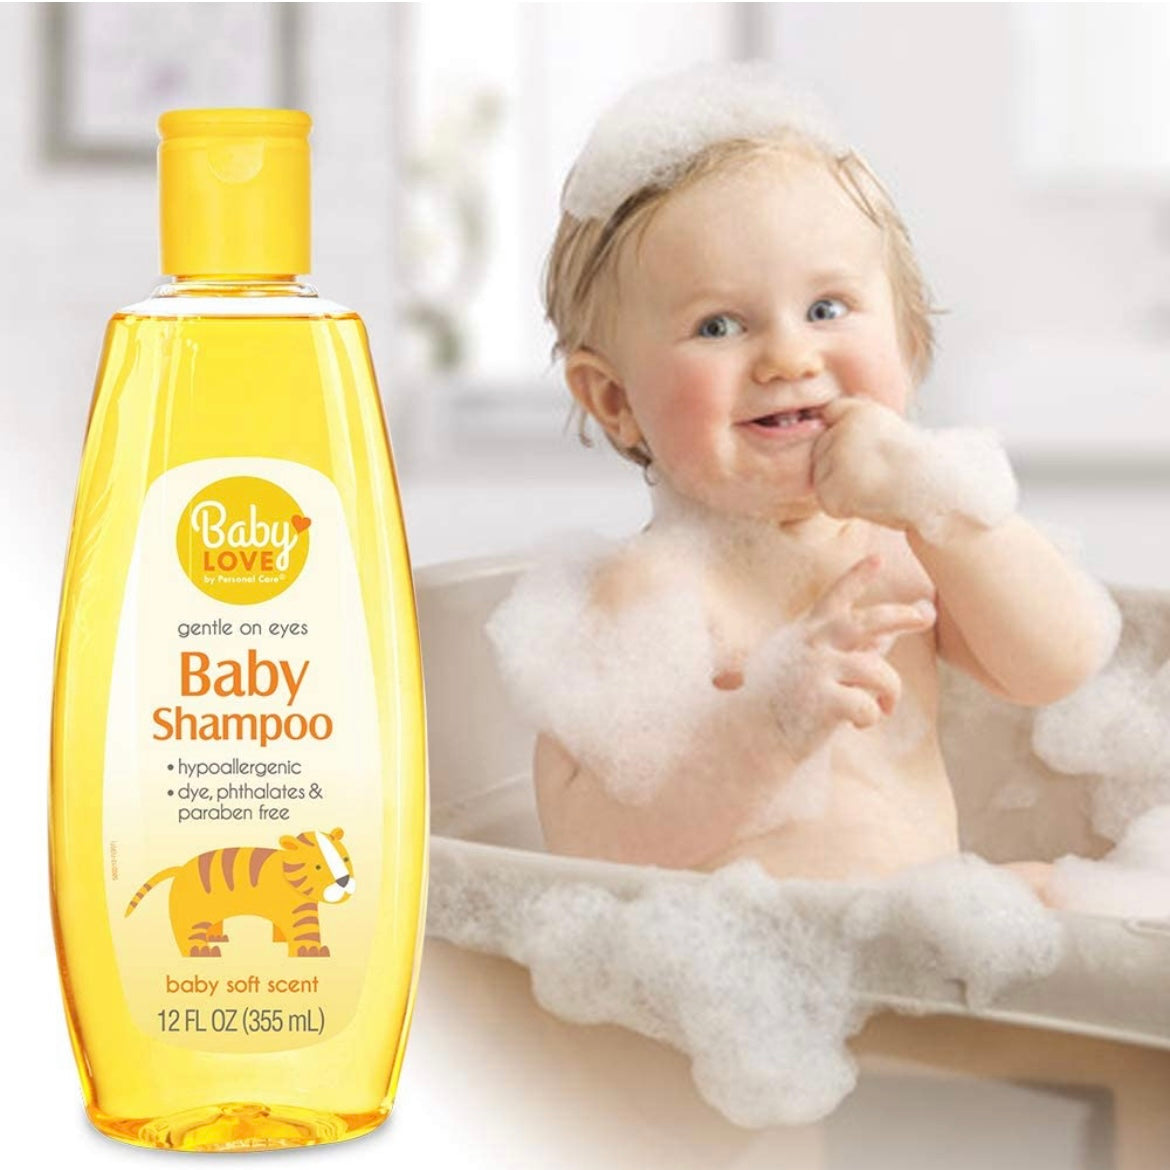 Baby Love Baby Shampoo, 12fl oz